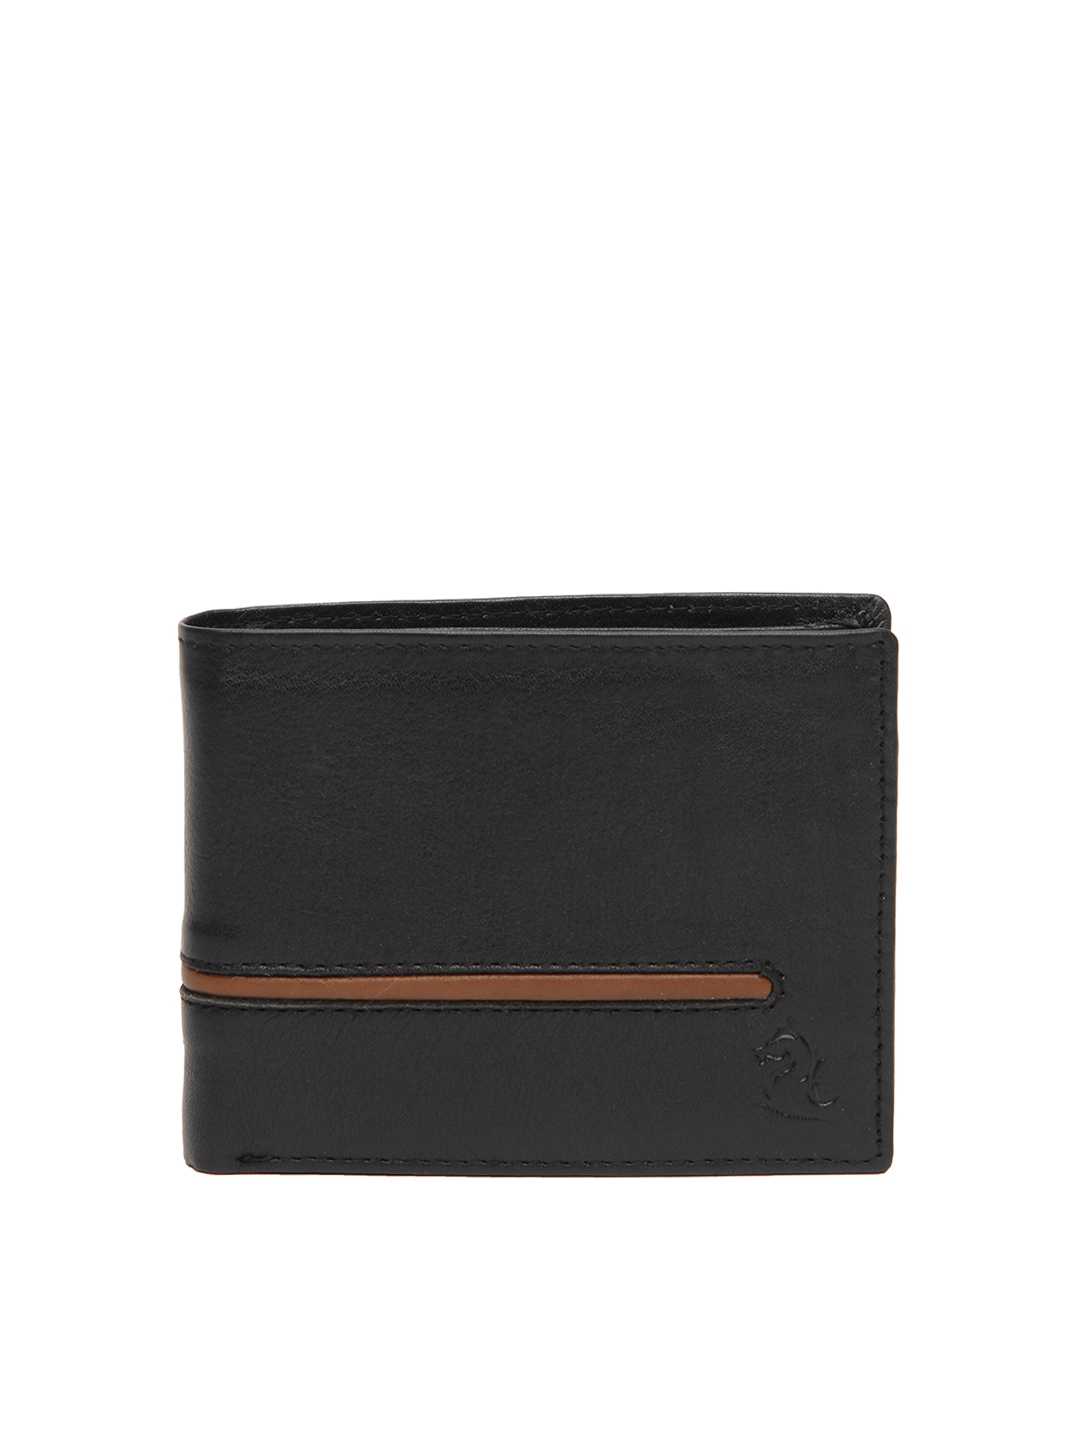 Buy Kara Men Black Leather Wallet - Wallets for Men 301336 | Myntra